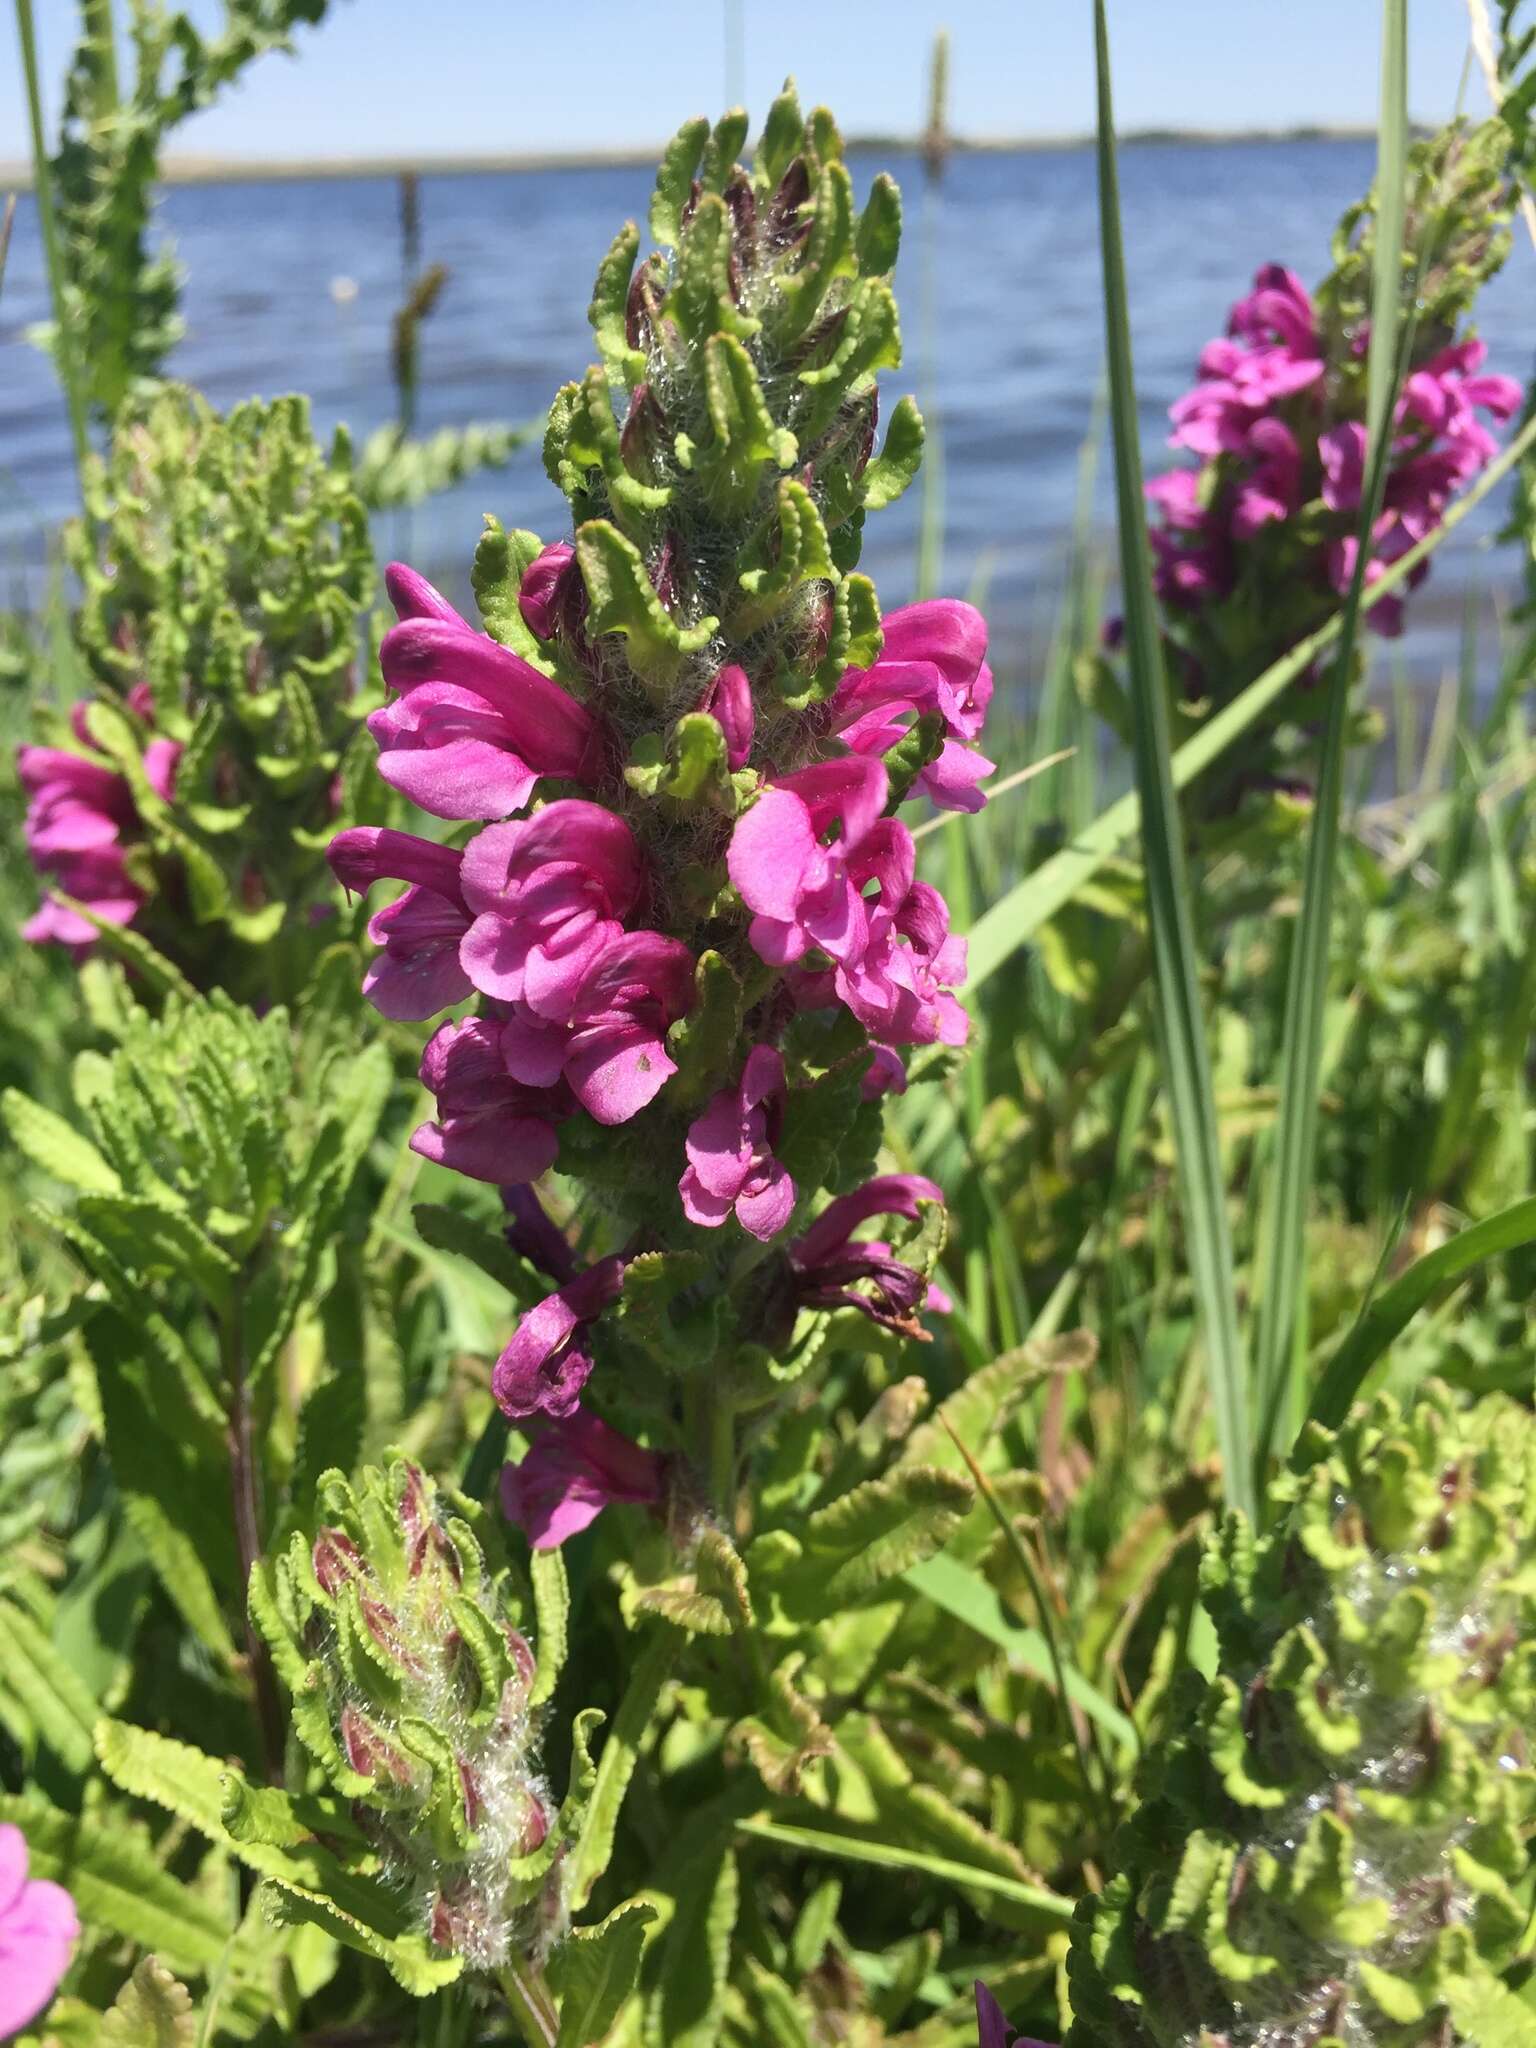 Image of Purple-Flower Lousewort